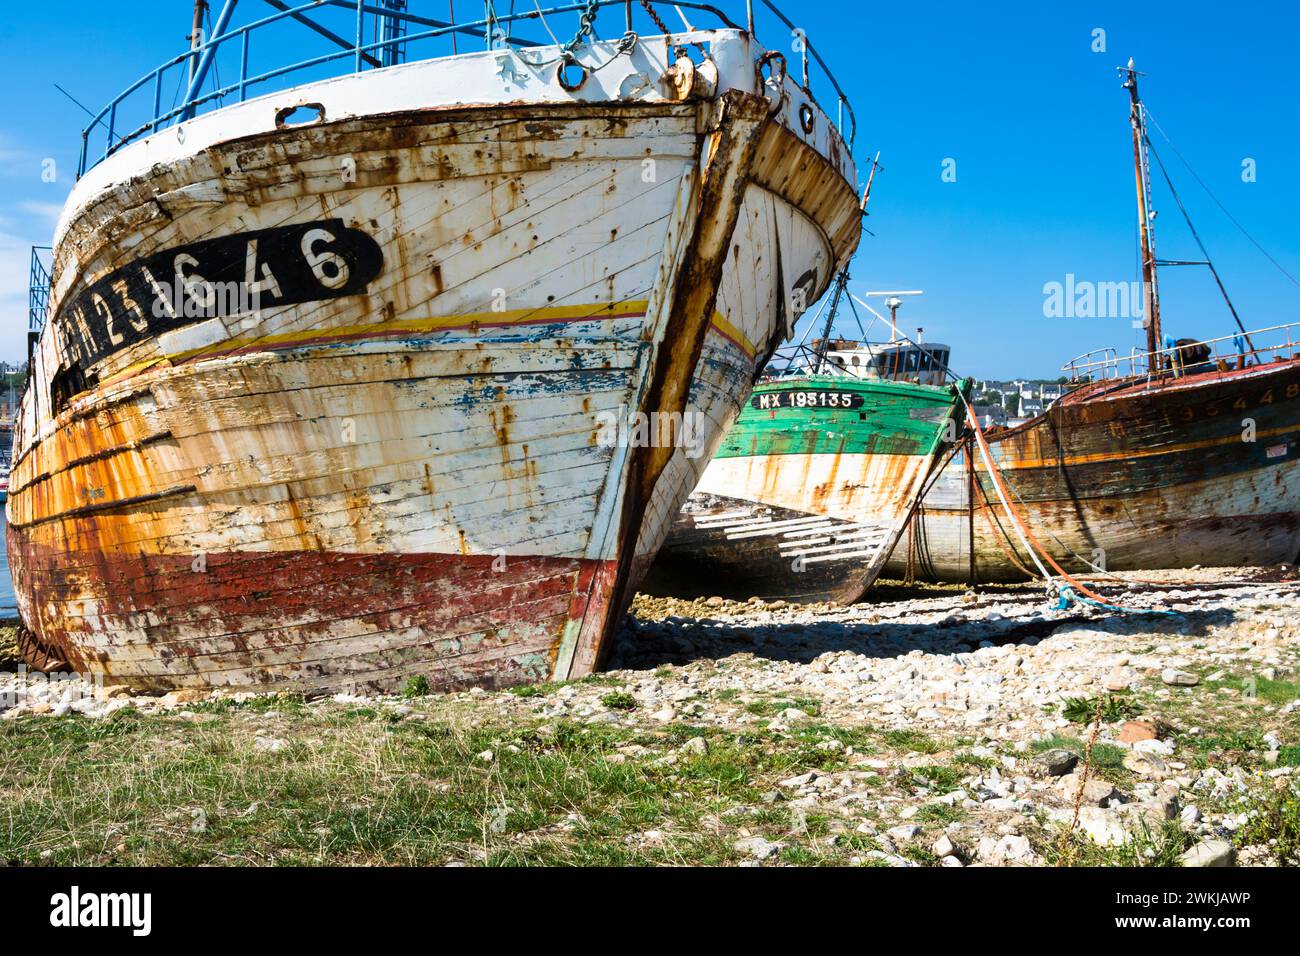 The shipwreck in Camaret-sur-Mer, northwestern France Stock Photo